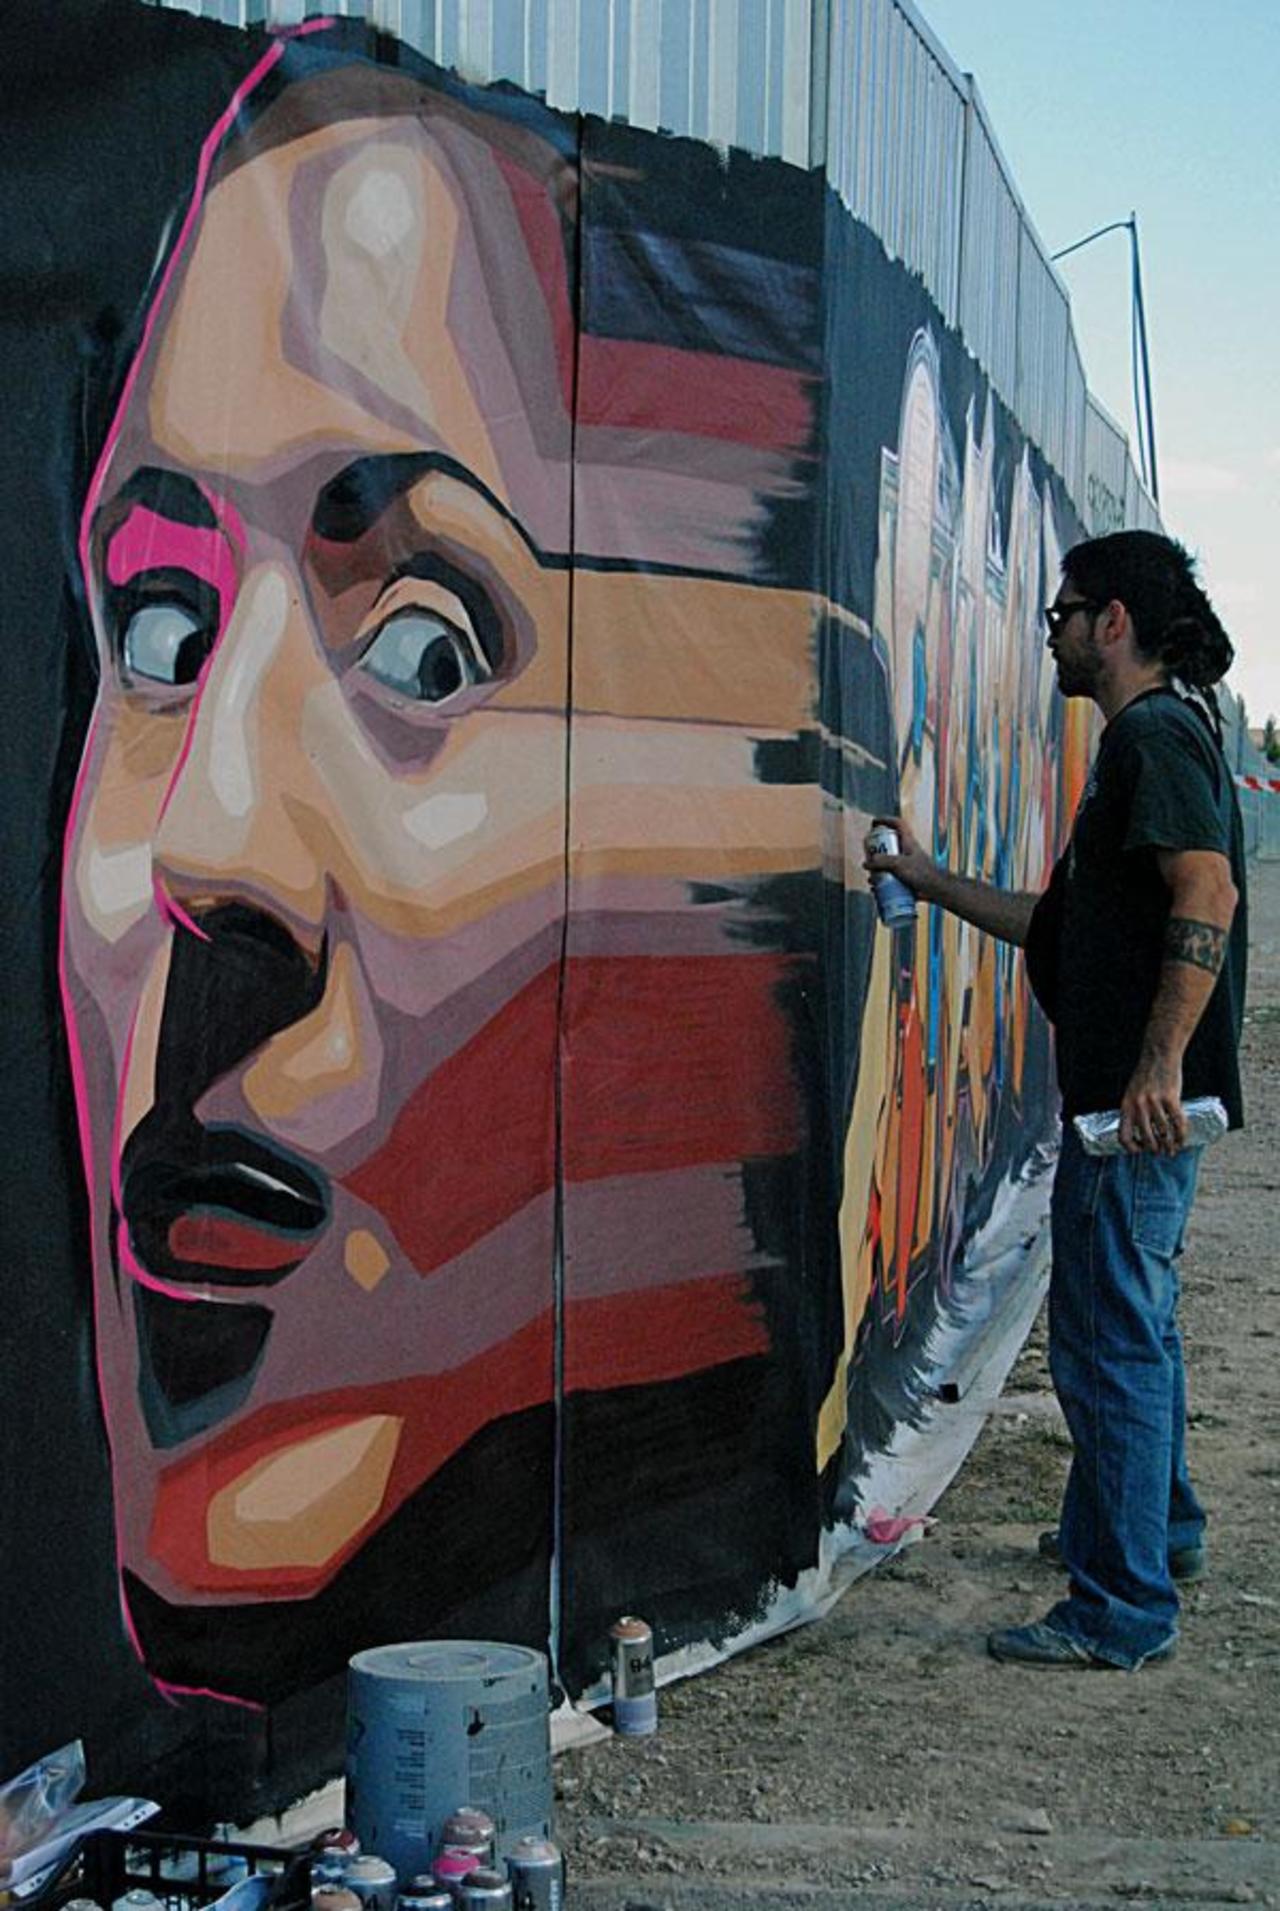 Head out from the spray #urbanart #streetart #graffiti #streetphotography http://t.co/B4imk2kMtR